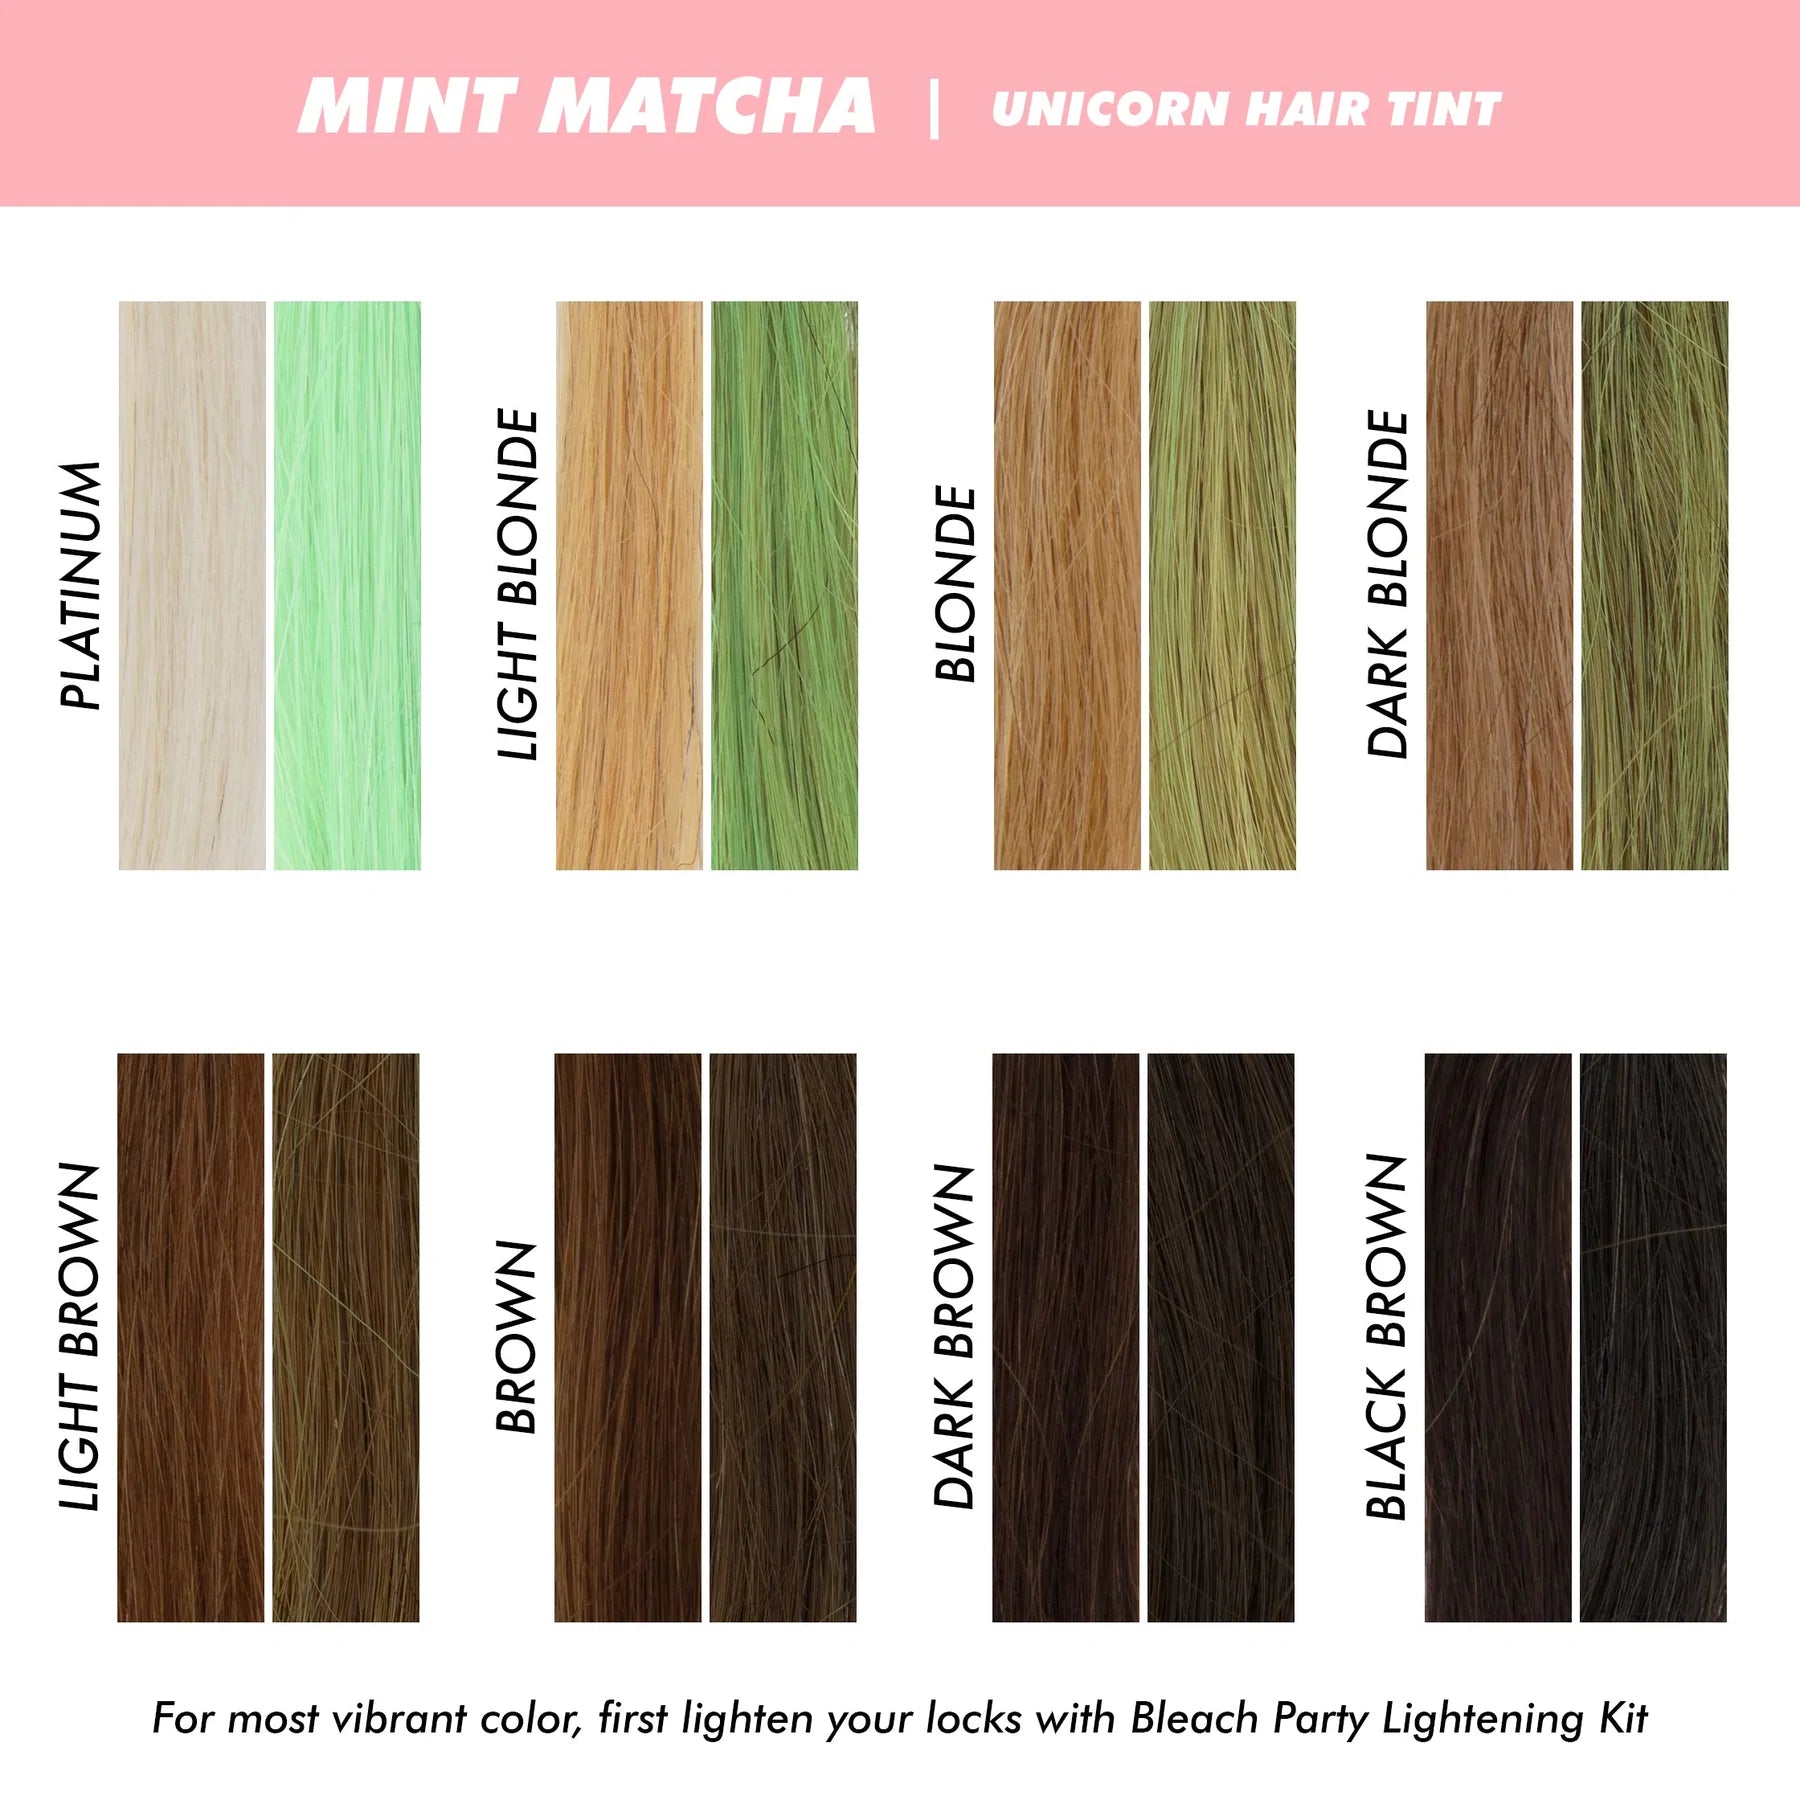 Lime Crime - Unicorn Hair Tint Mint Matcha